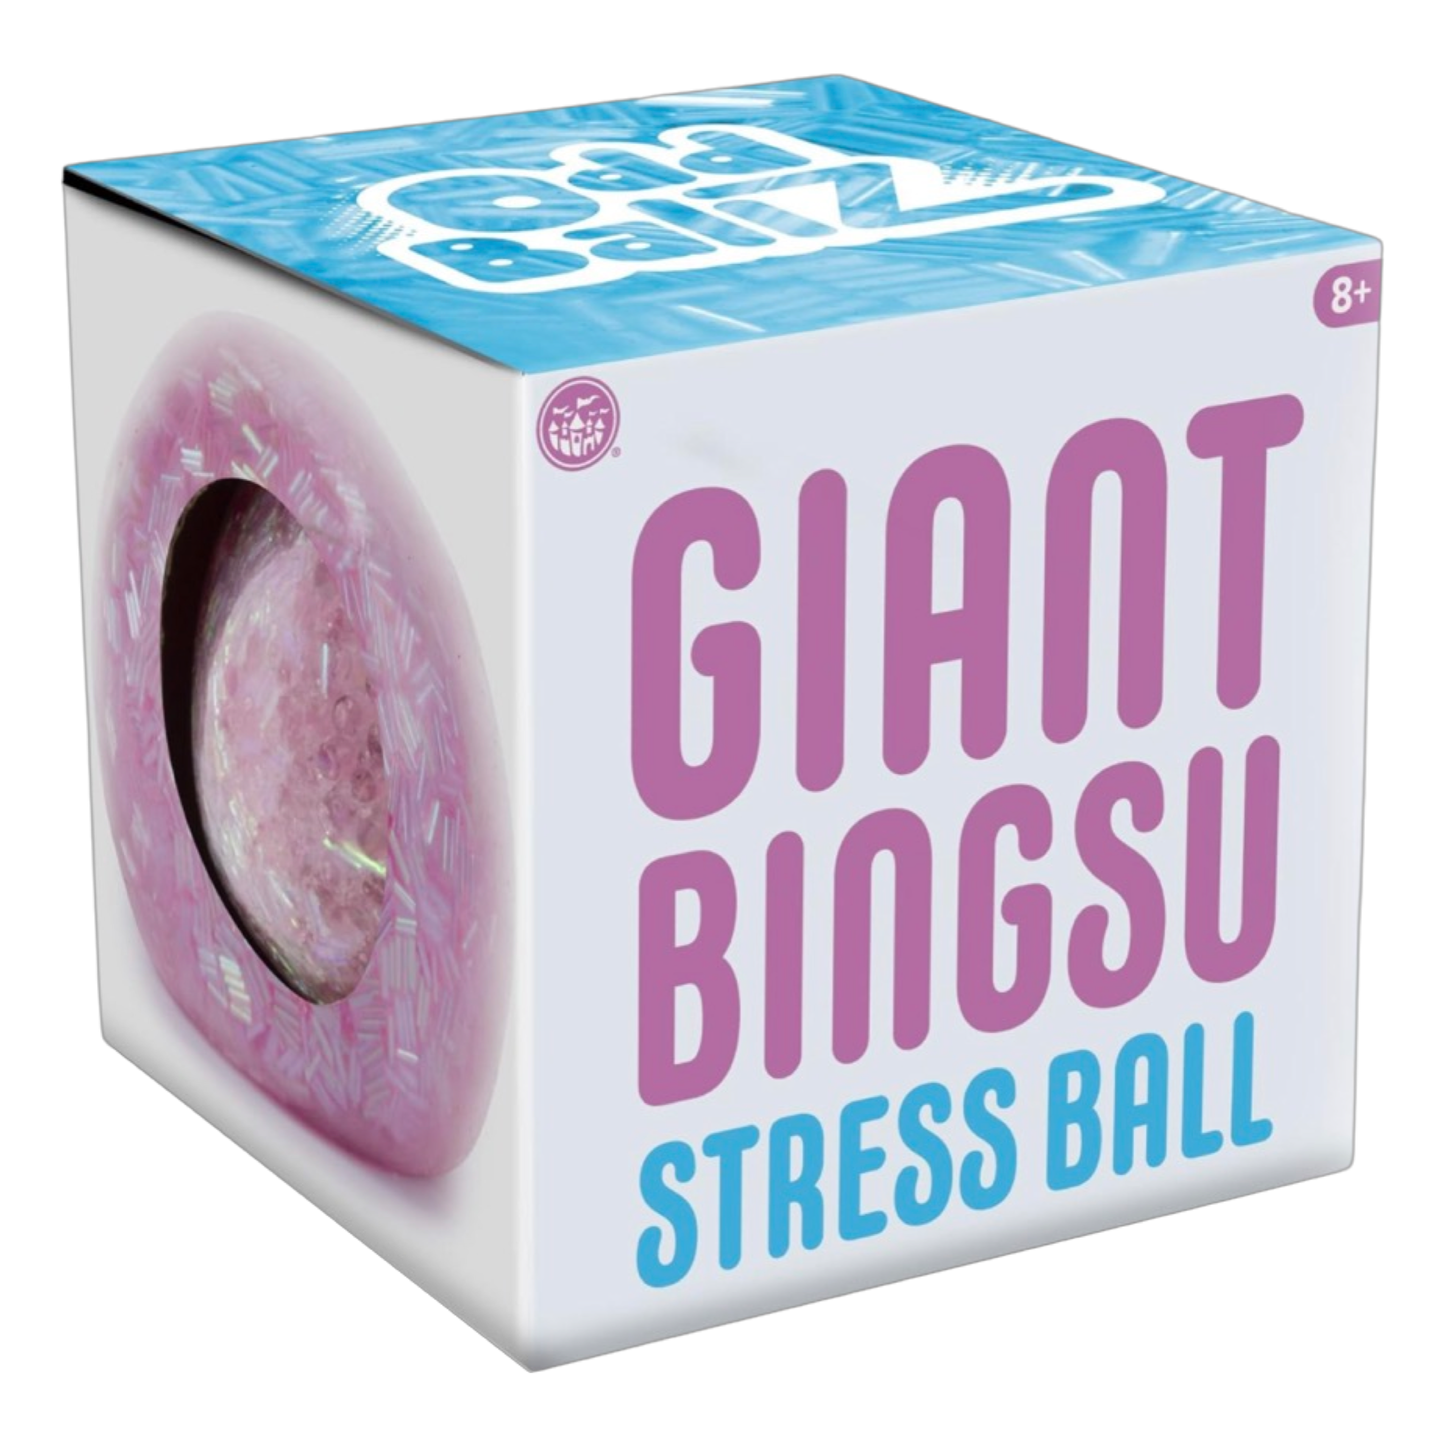 Giant Bingsu Stress Ball